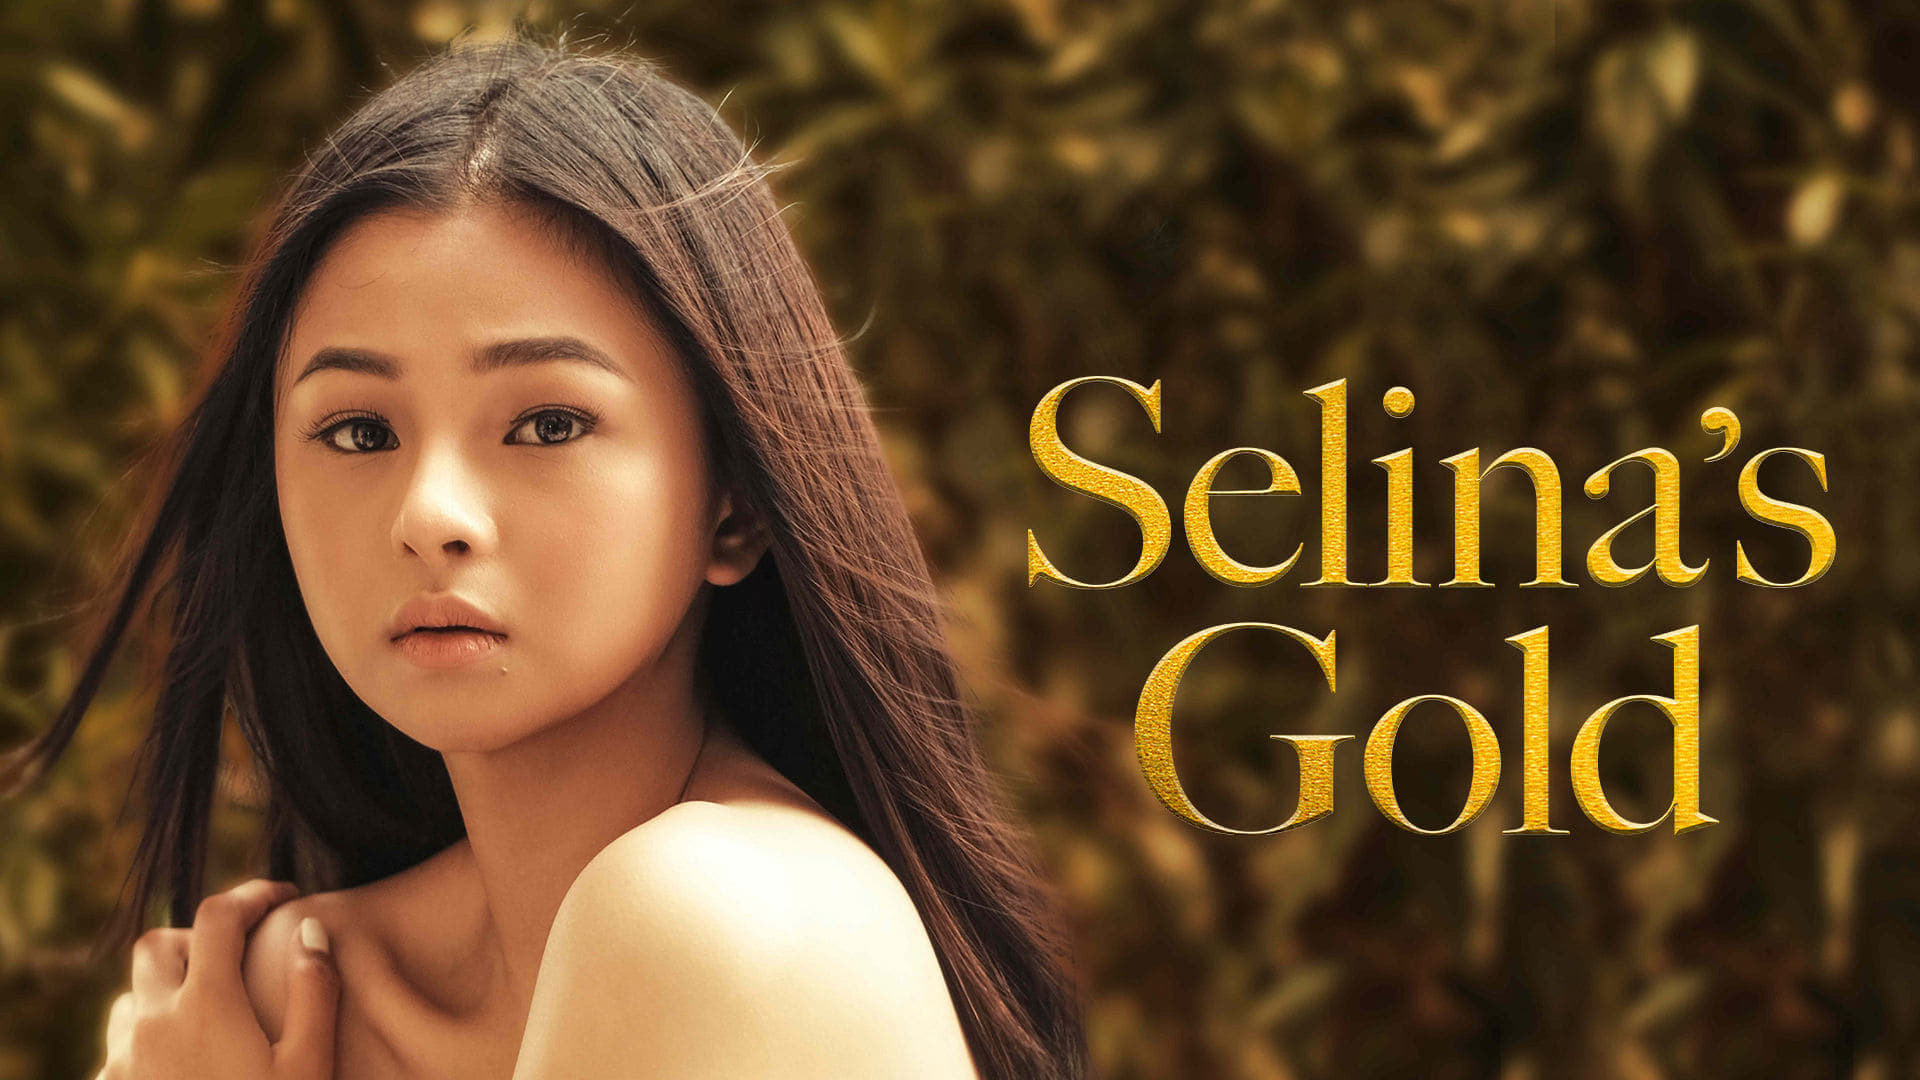 Selena's gold full movie